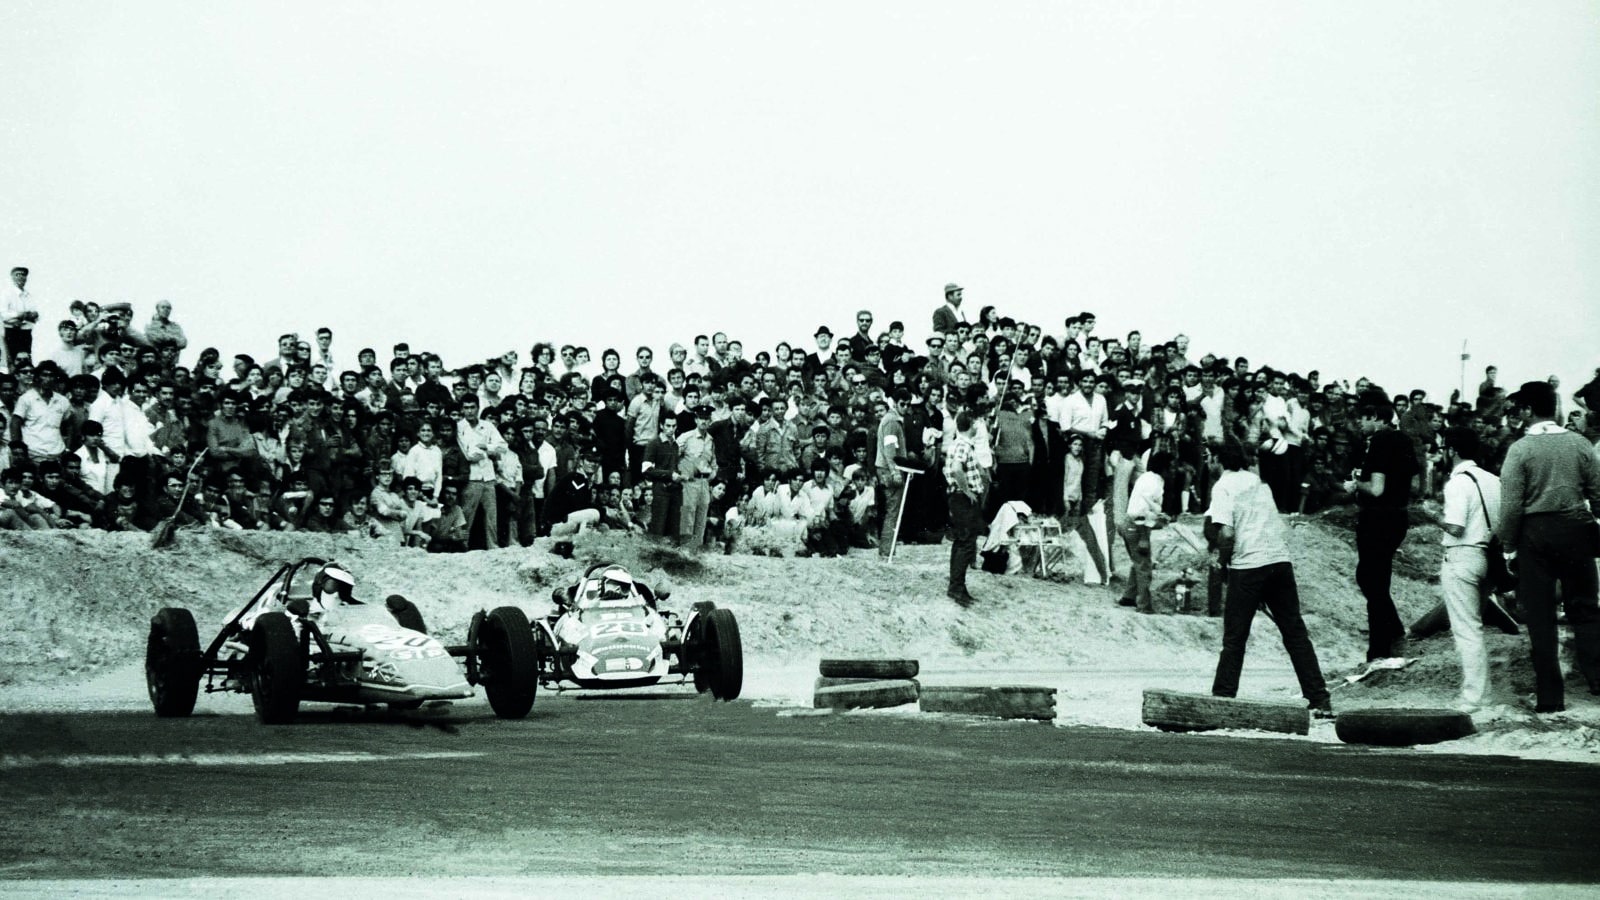 F2 race at the 1970 Israel Grand prix